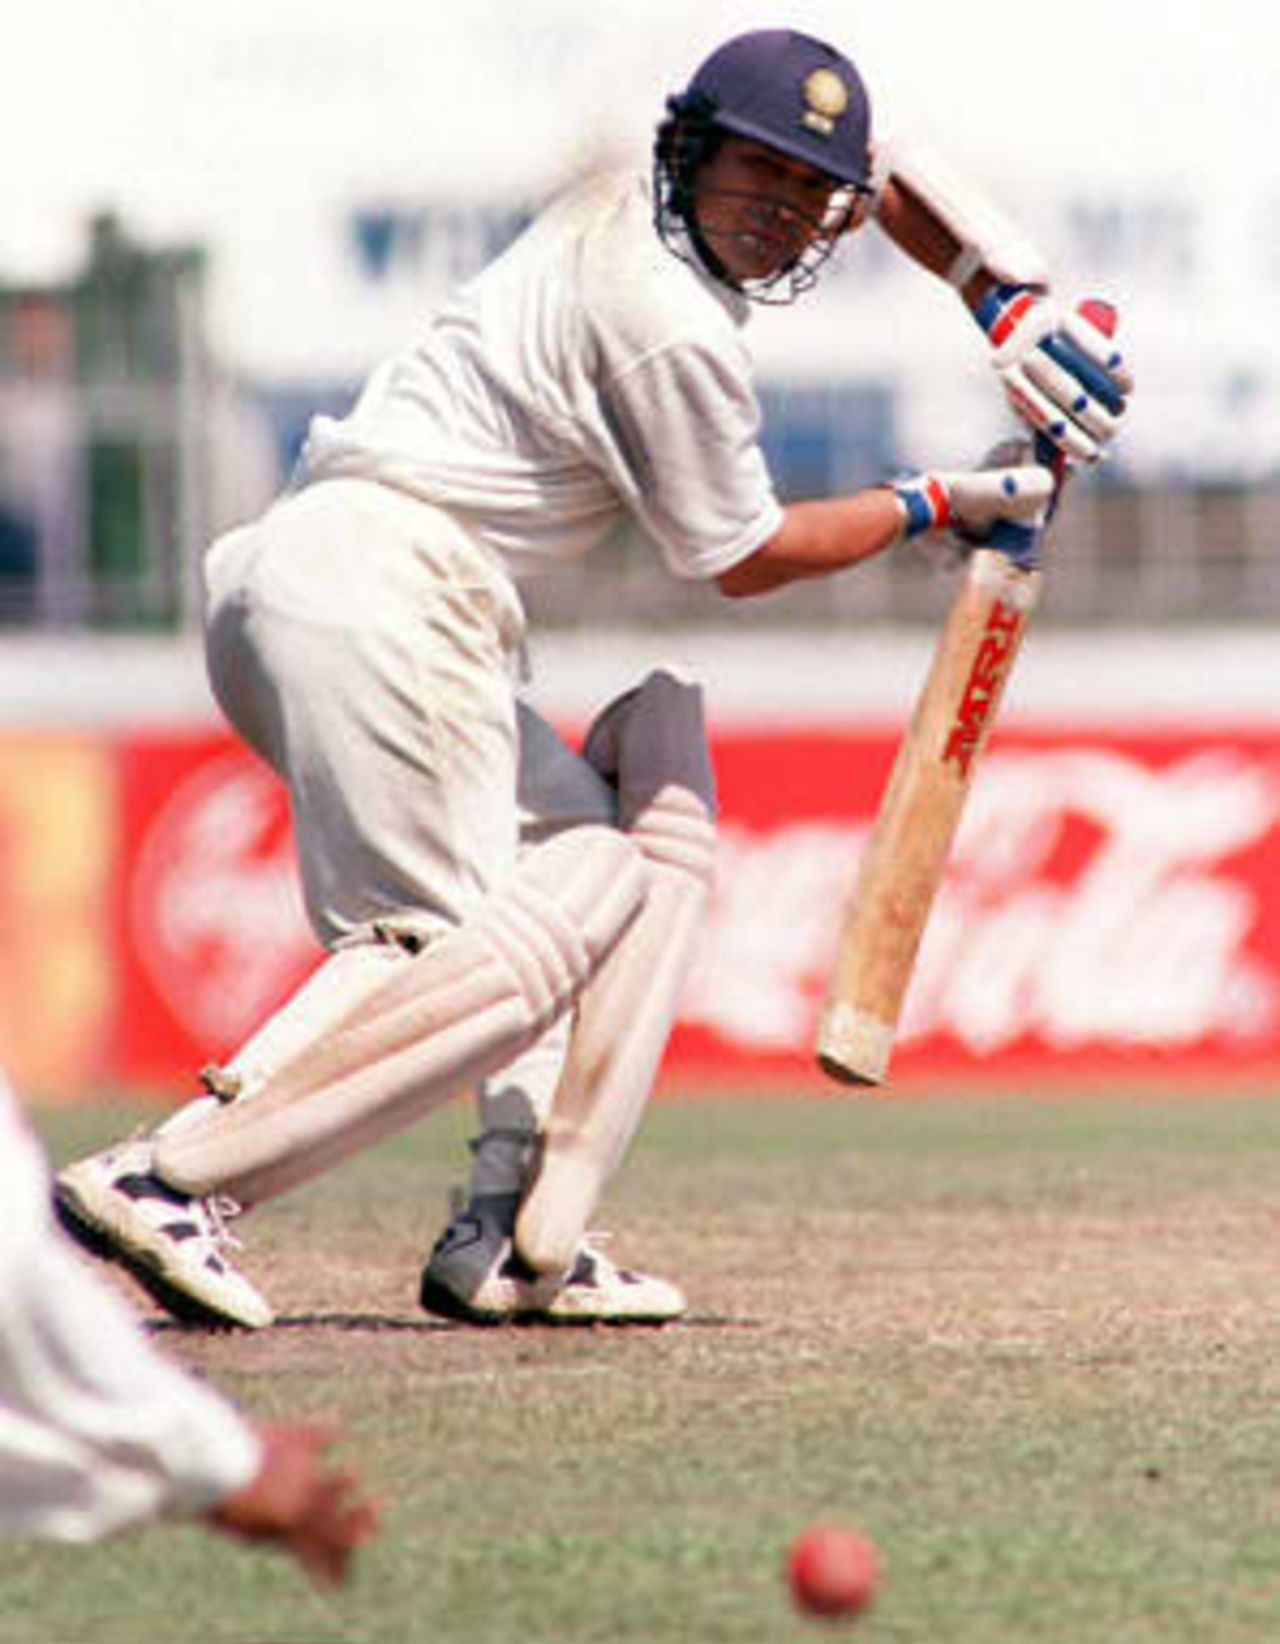 Tendulkar guides the ball past slip during his century - Asian Test Championship, 1998/99, 2nd Match, Sri Lanka v India, Sinhalese Sports Club, Colombo, 28 February 1999